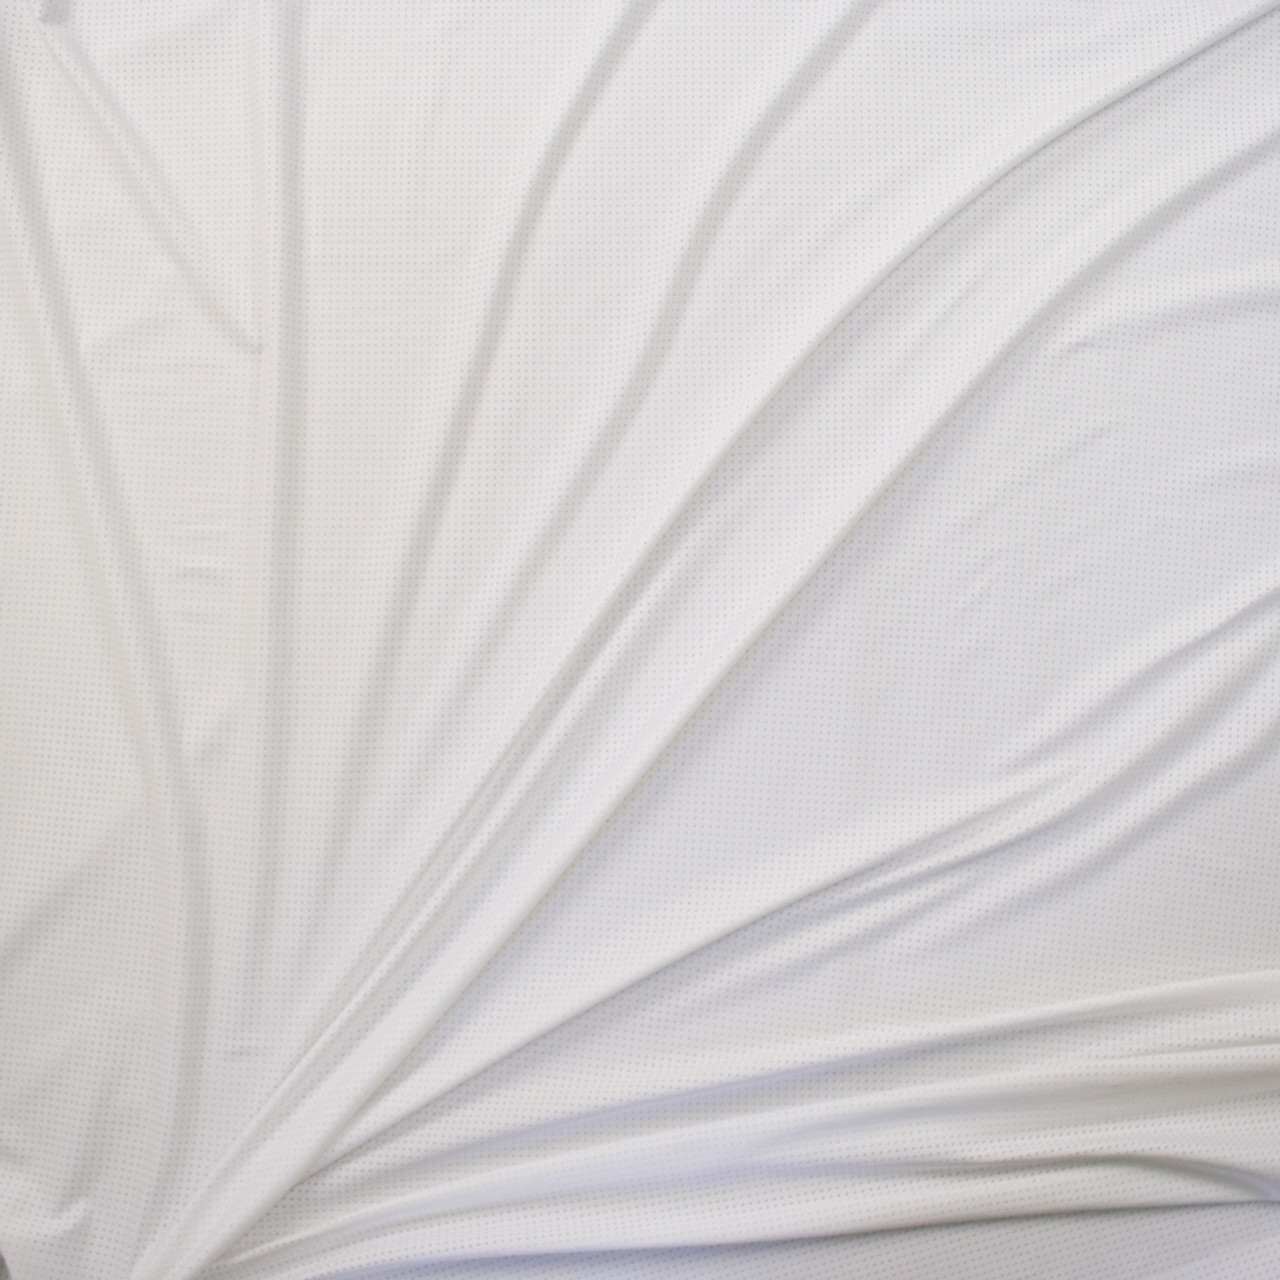 Cali Fabrics White Perforated Stretch Athletic Nylon/Spandex